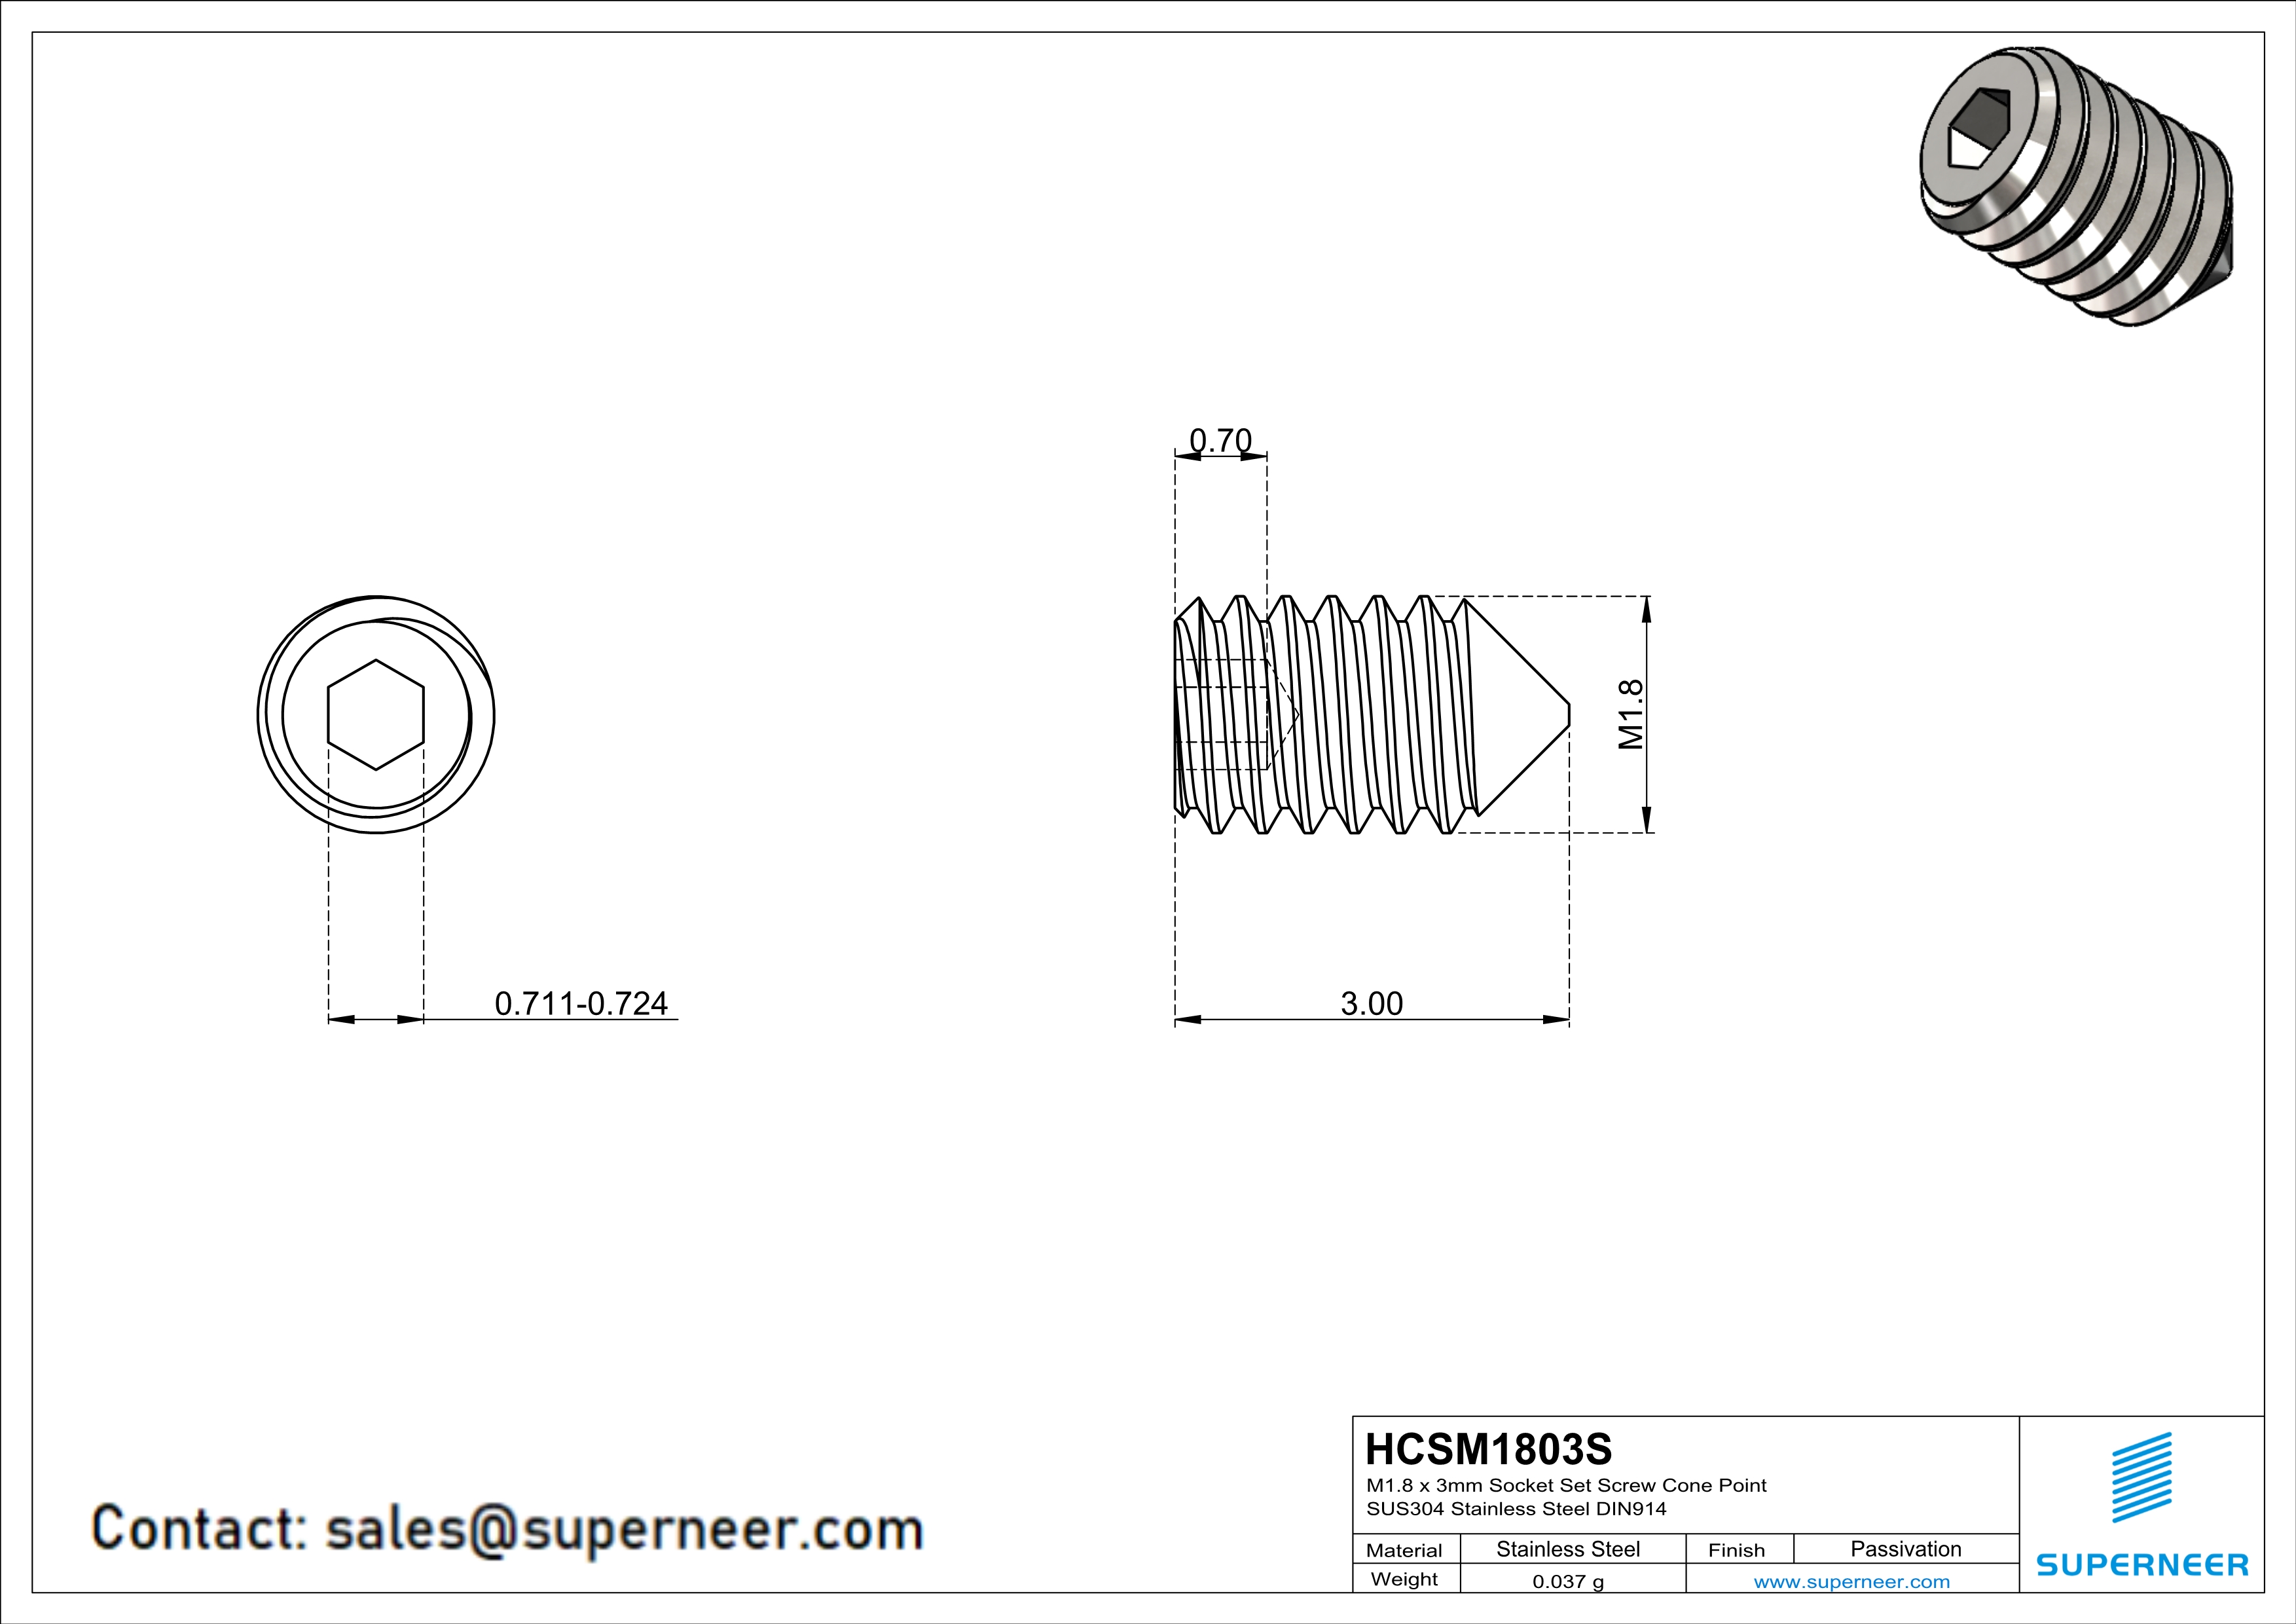 M1.8 x 3mm Socket Set Screw Cone Point SUS304 Stainless Steel Inox DIN914